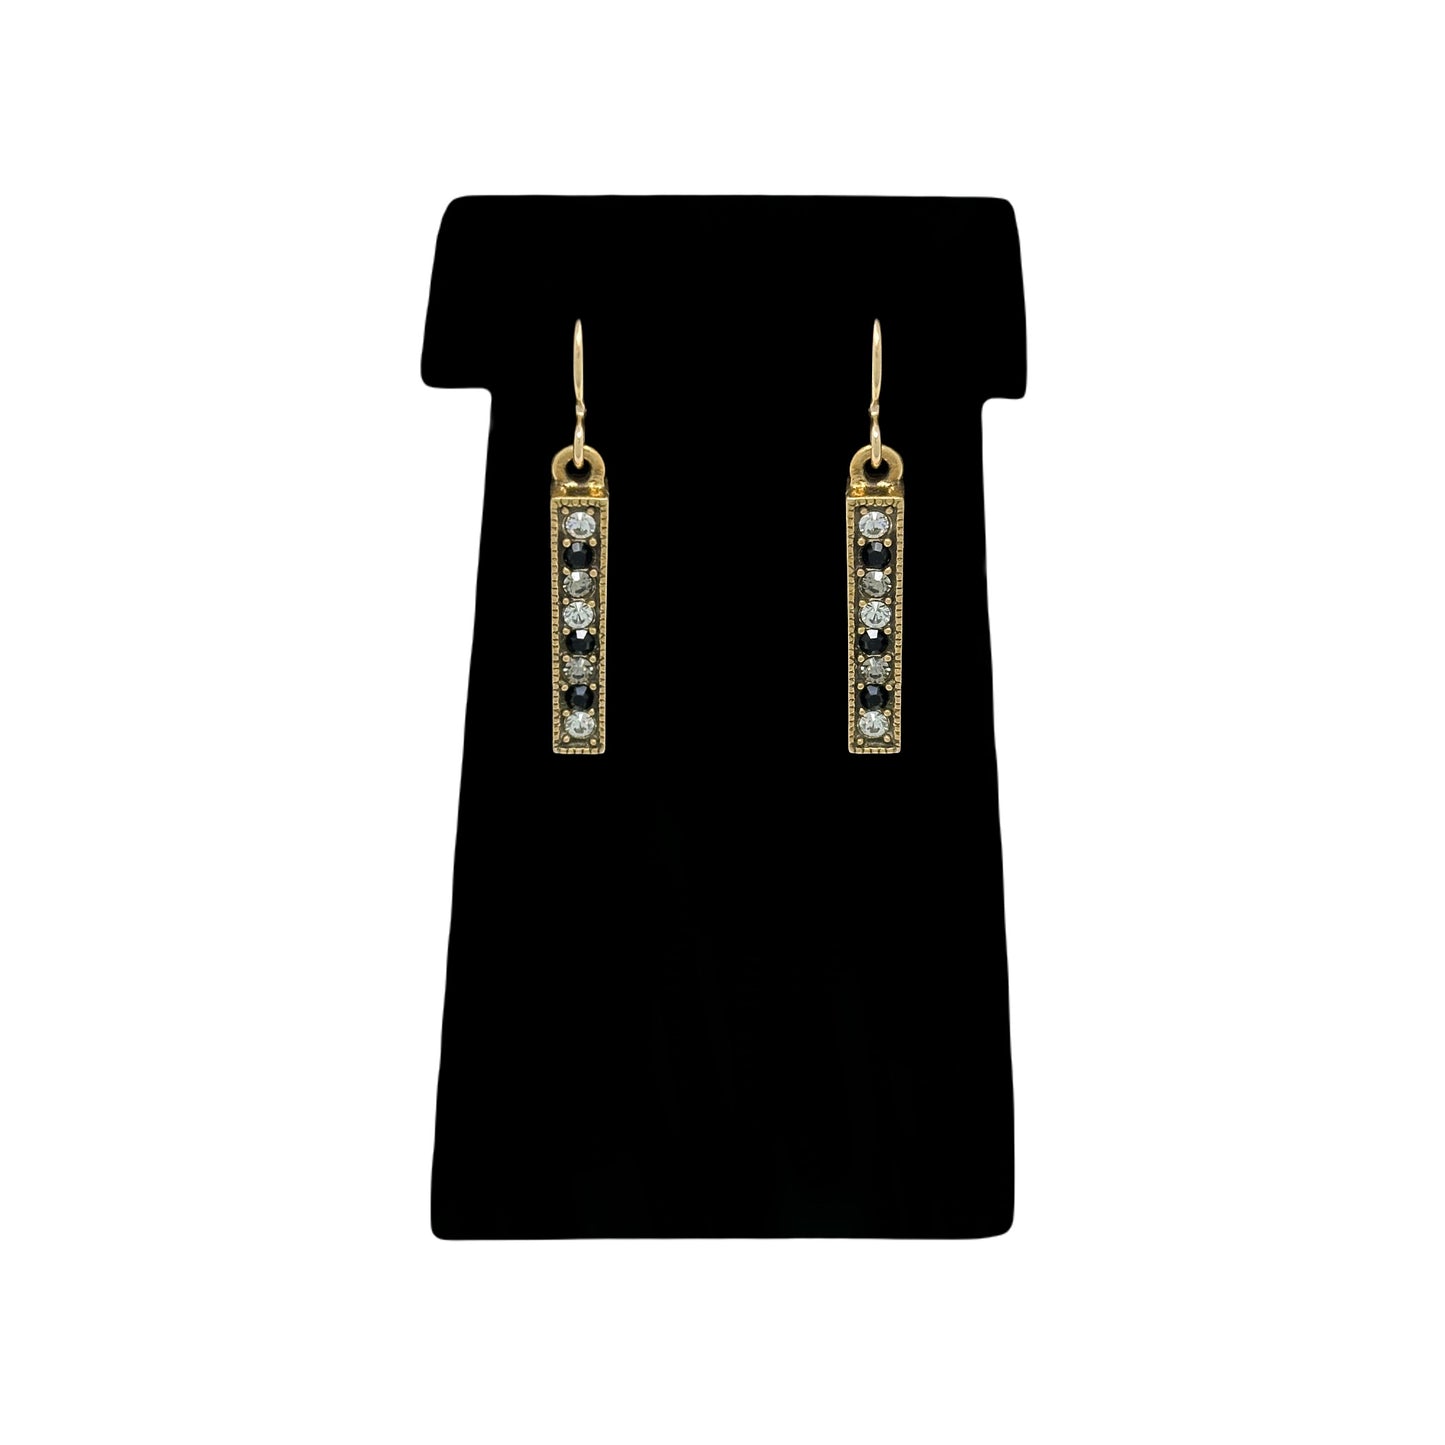 Patricia Locke Zephyr Earrings in Gold Black & White